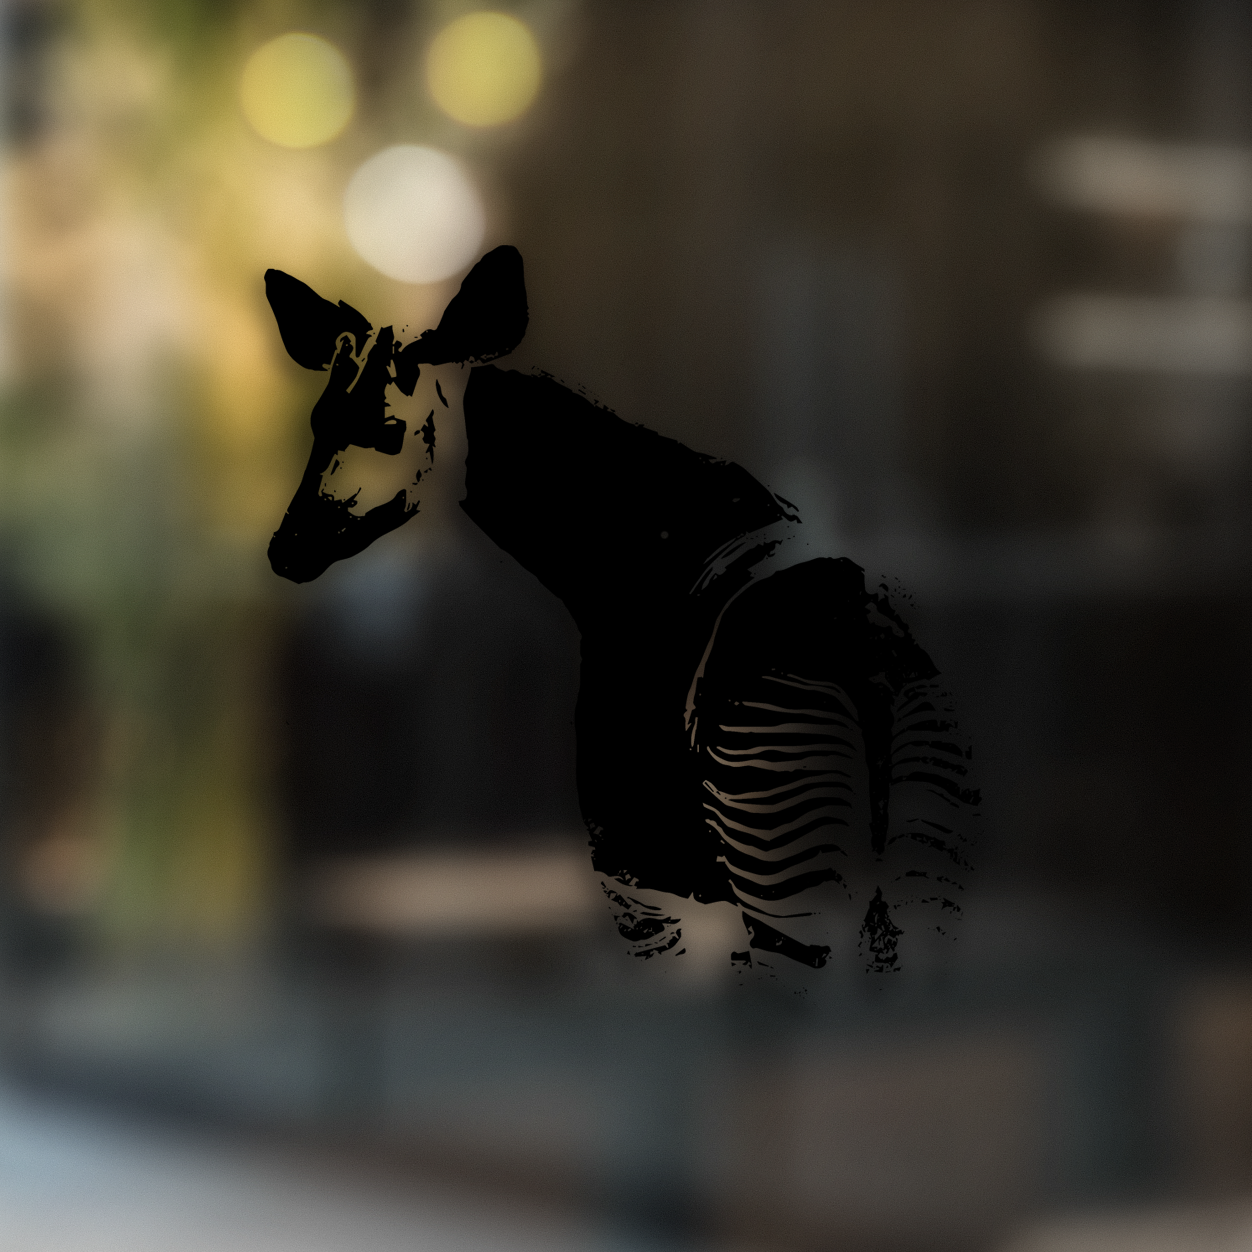 Okapi - Decal - Animals Anonymous Apparel